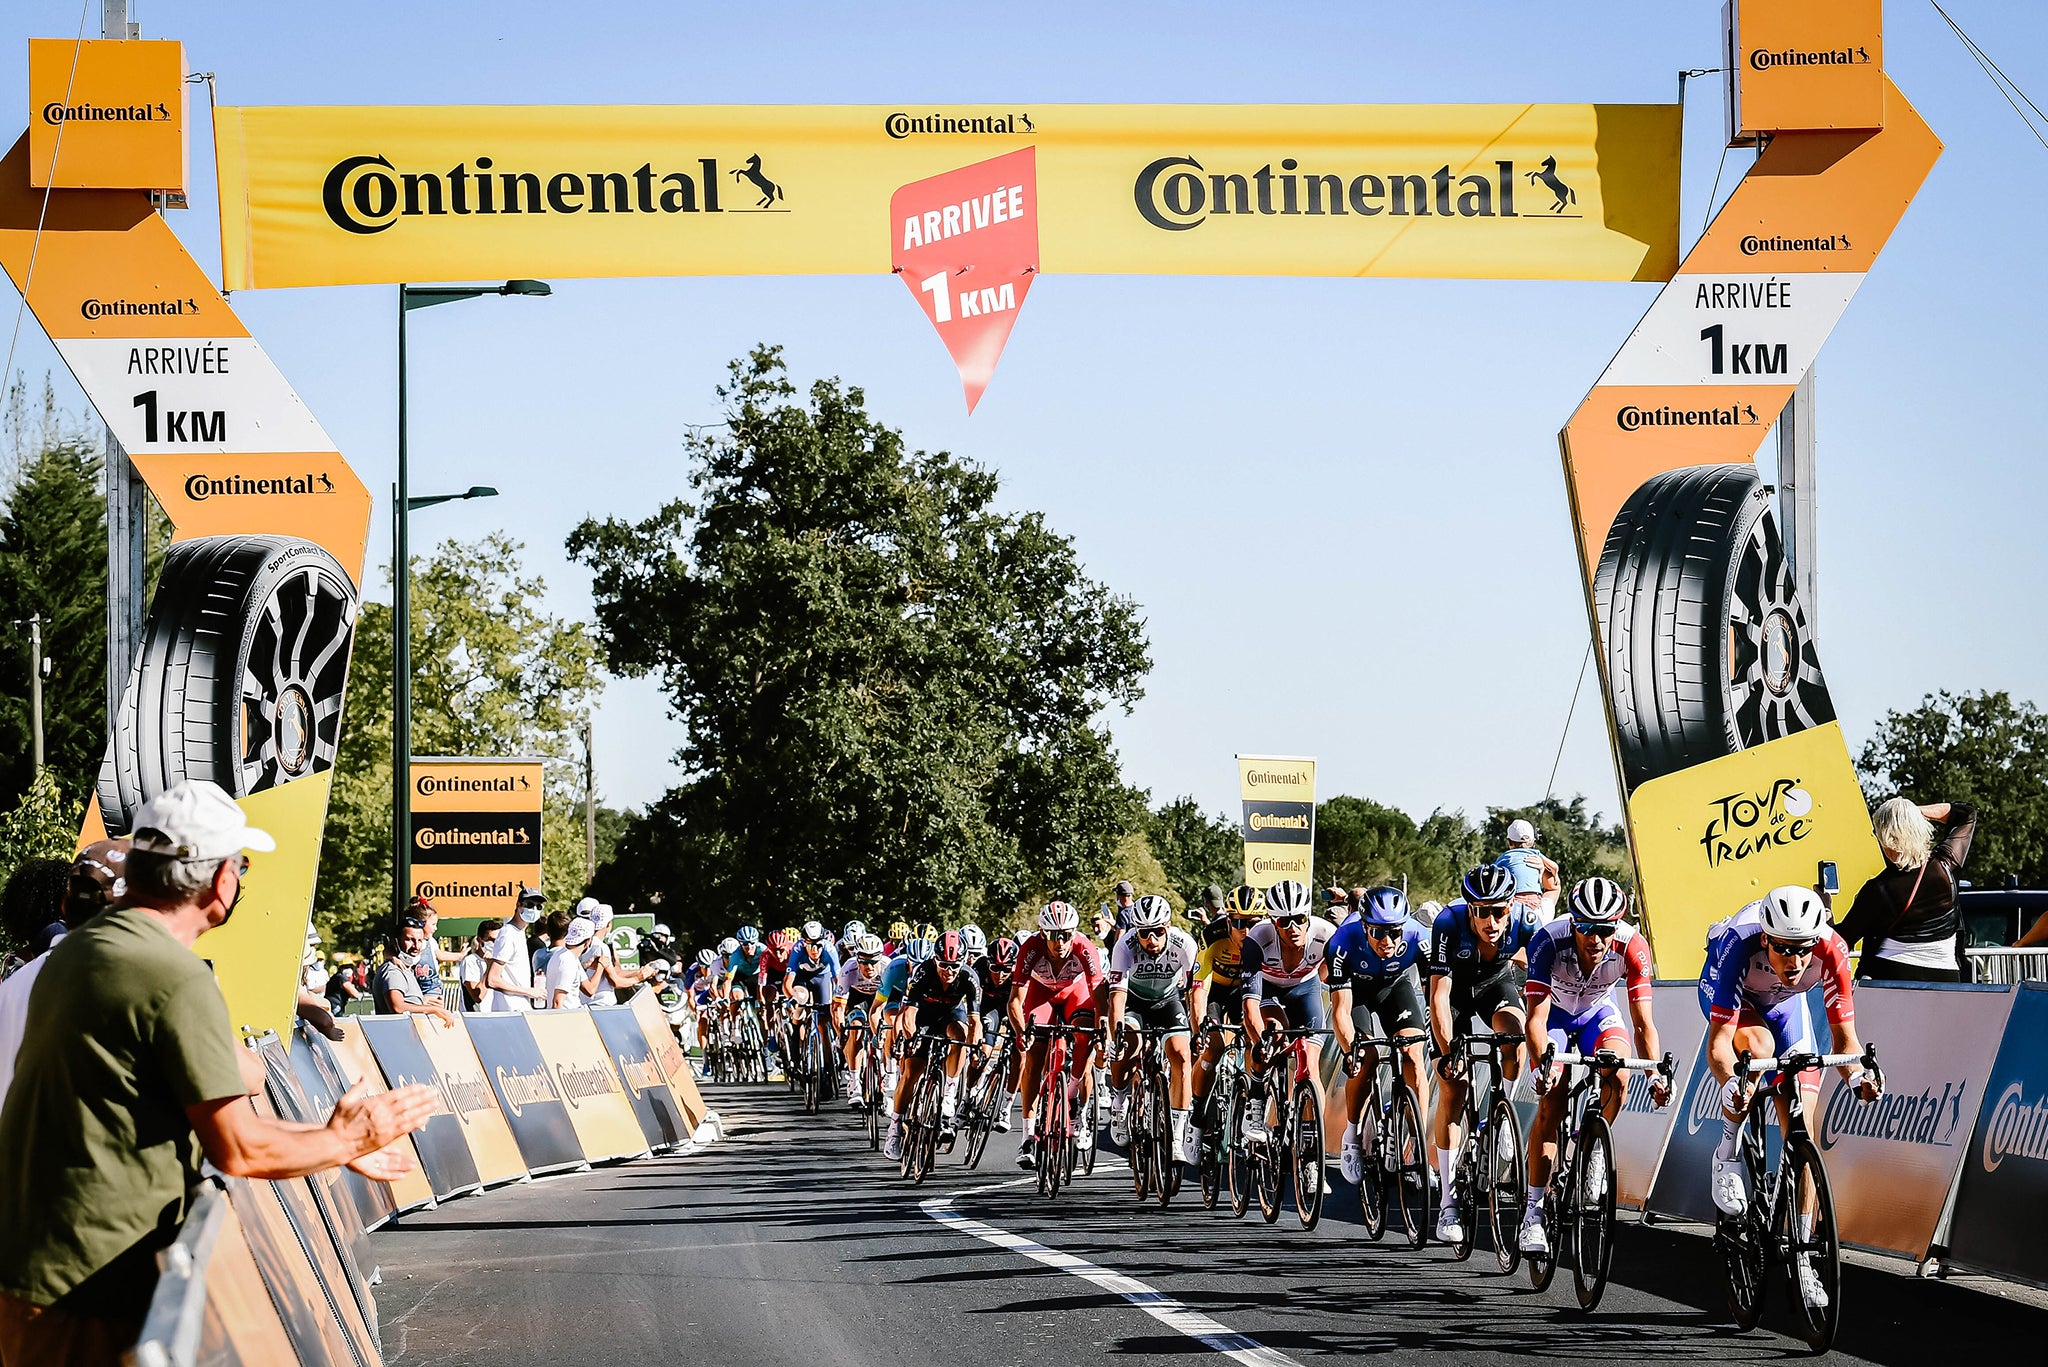 continental bisiklet yarışı sponsoru